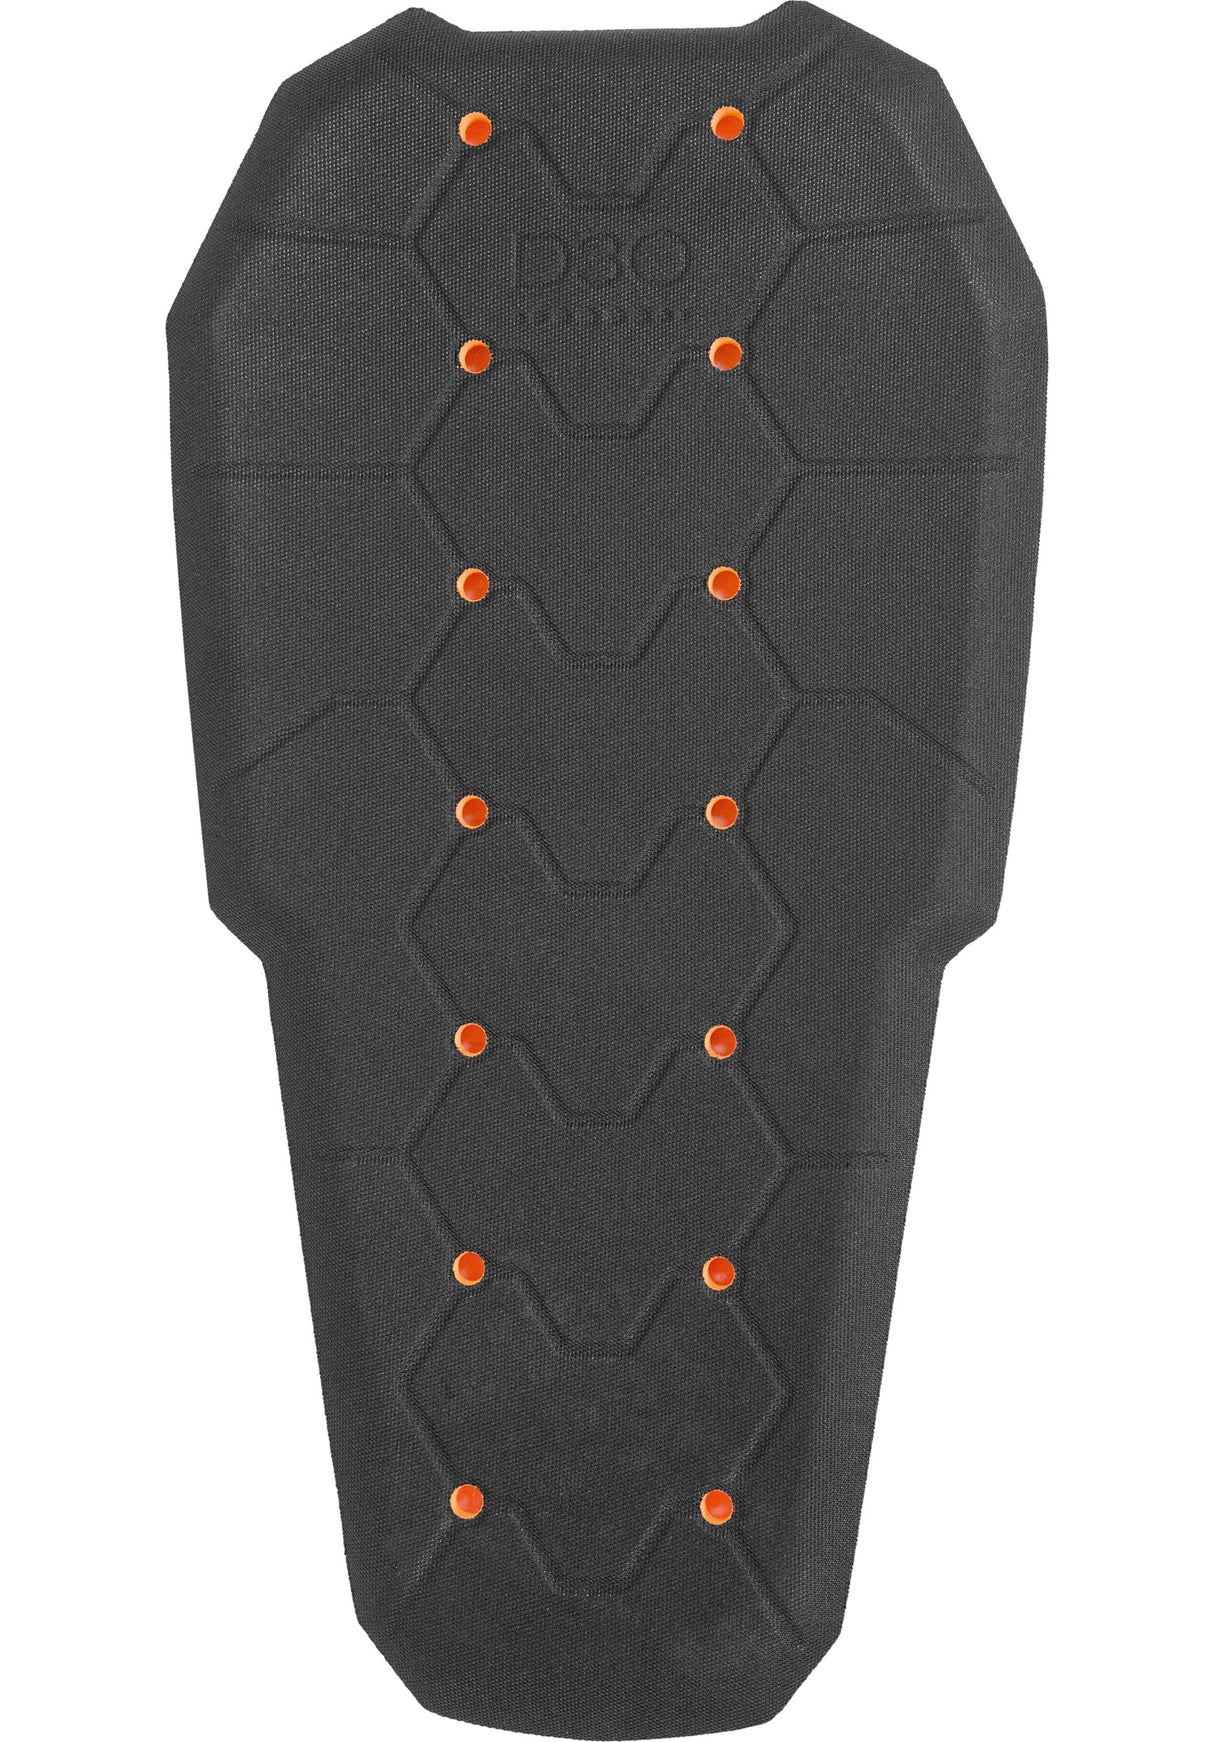 Backbone Vest D3O black-orange Close-Up2